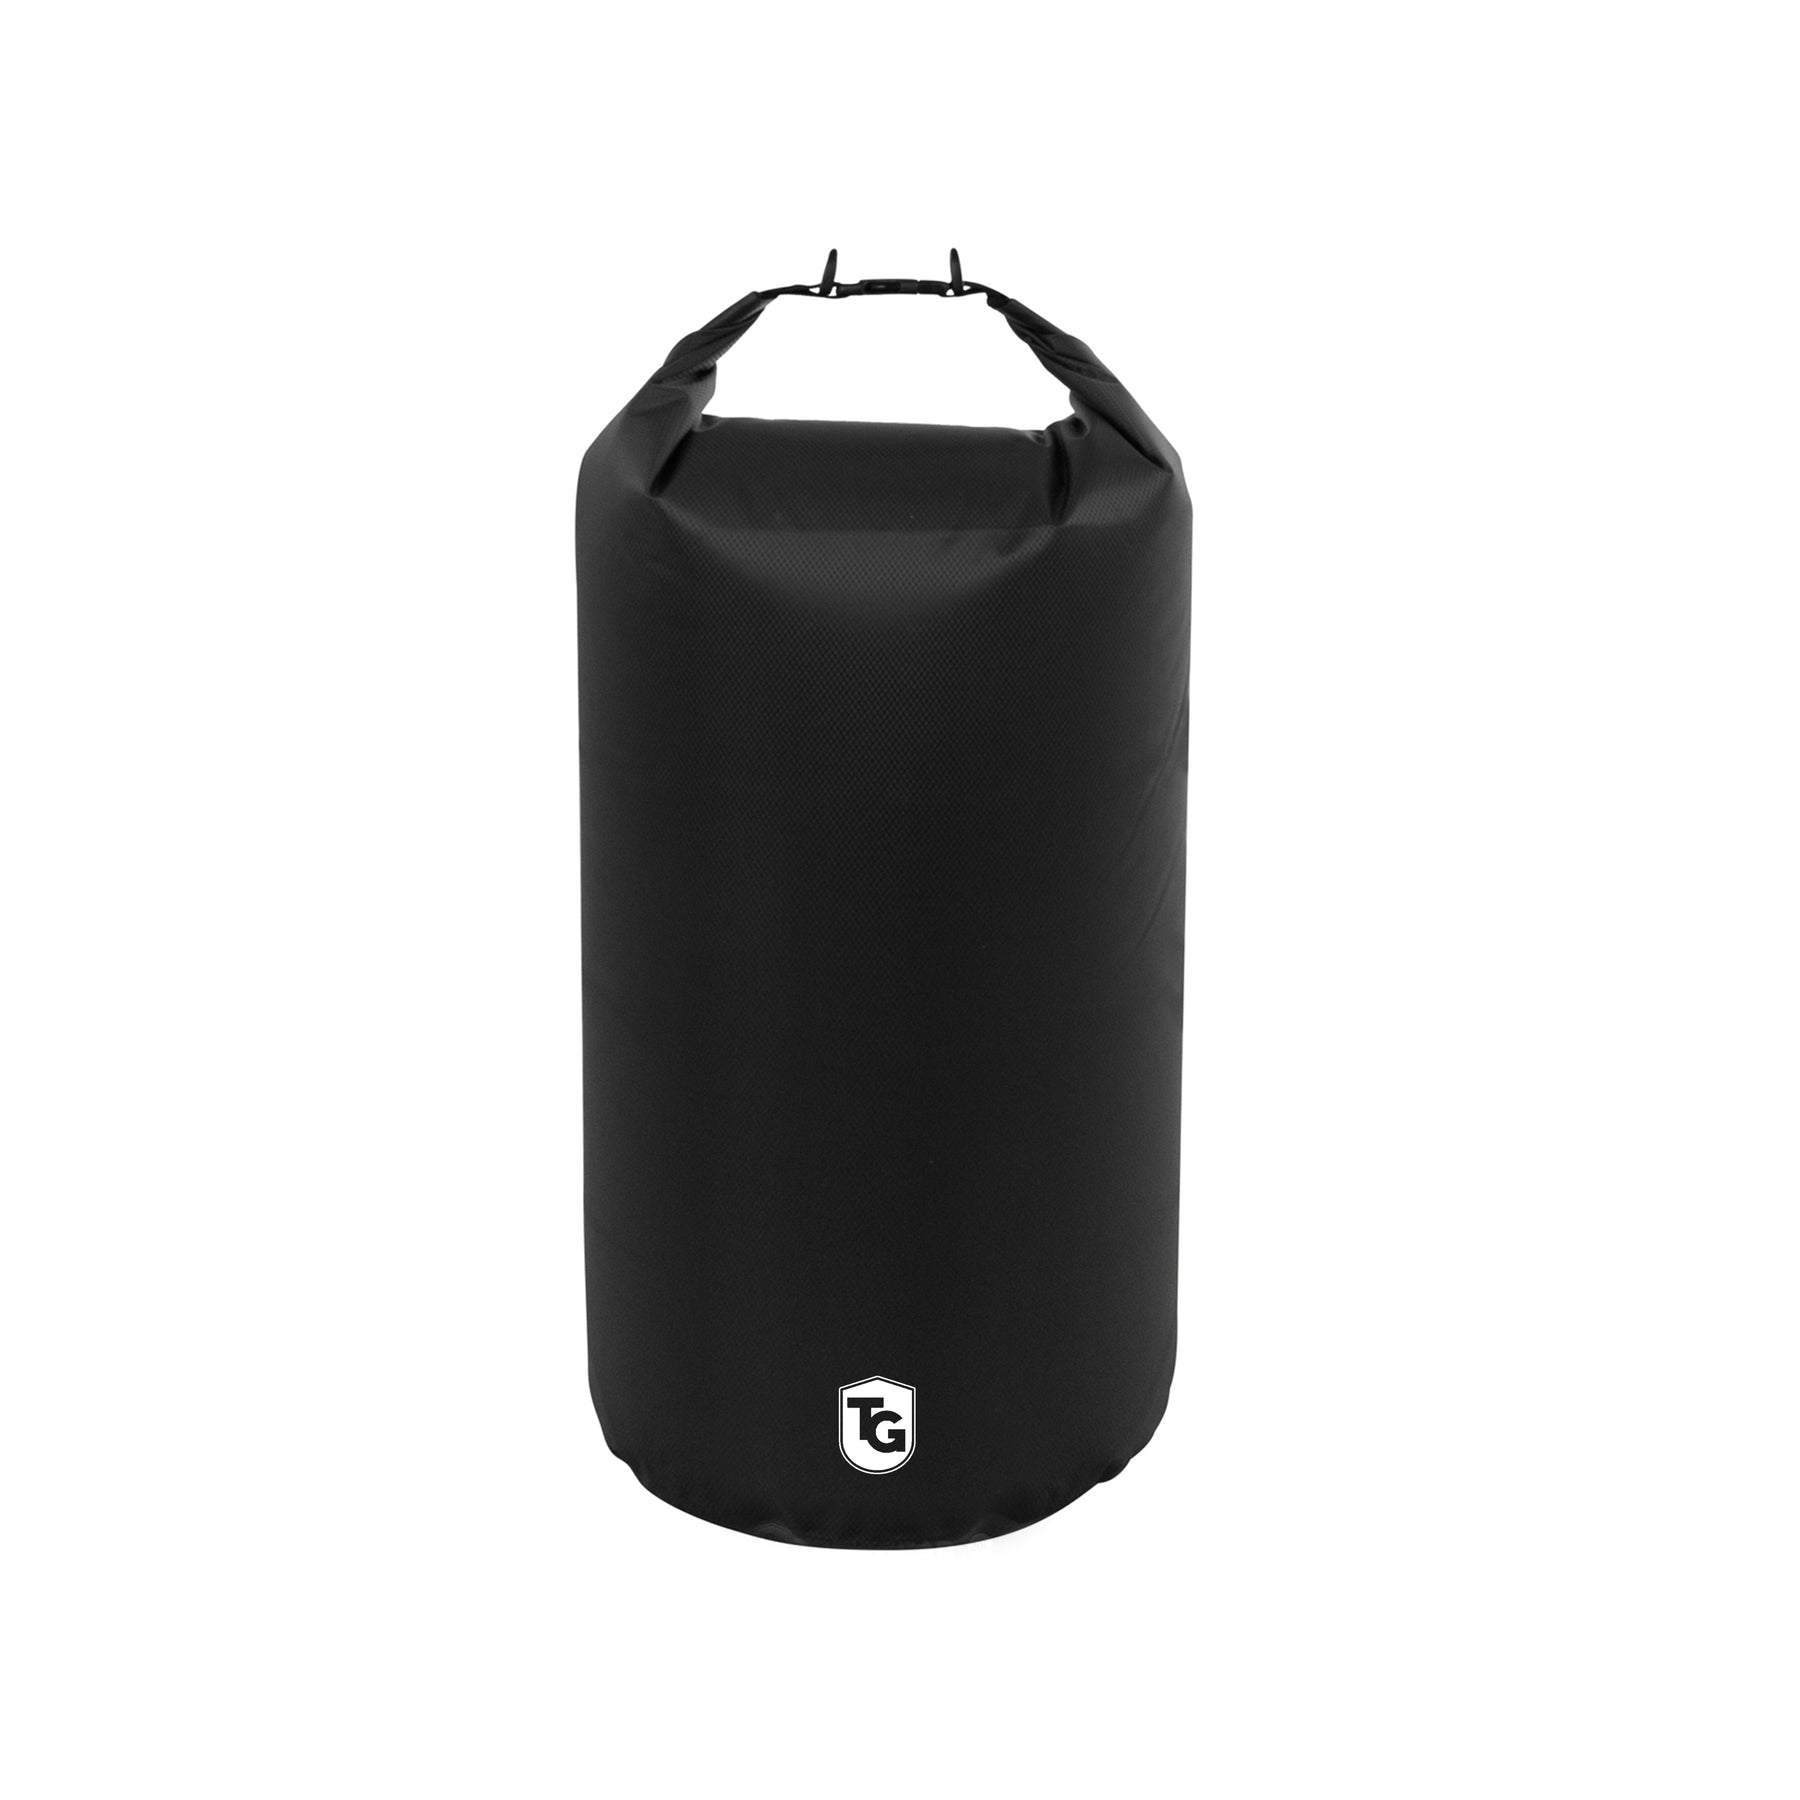 TrailGear 20 liter Heavy-Duty Dry Bag in the black variation.